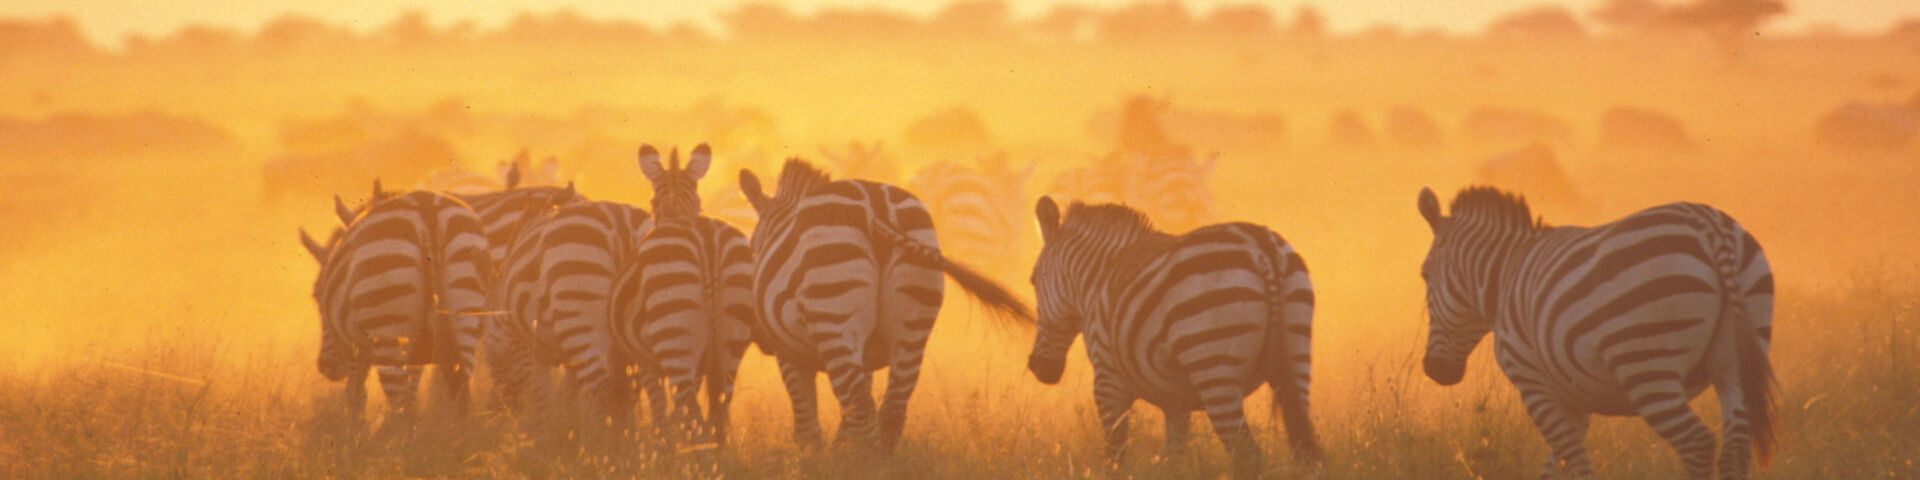 Tours and Safaris to Tanzania Zebras at Dawn in West Kilimanjaro